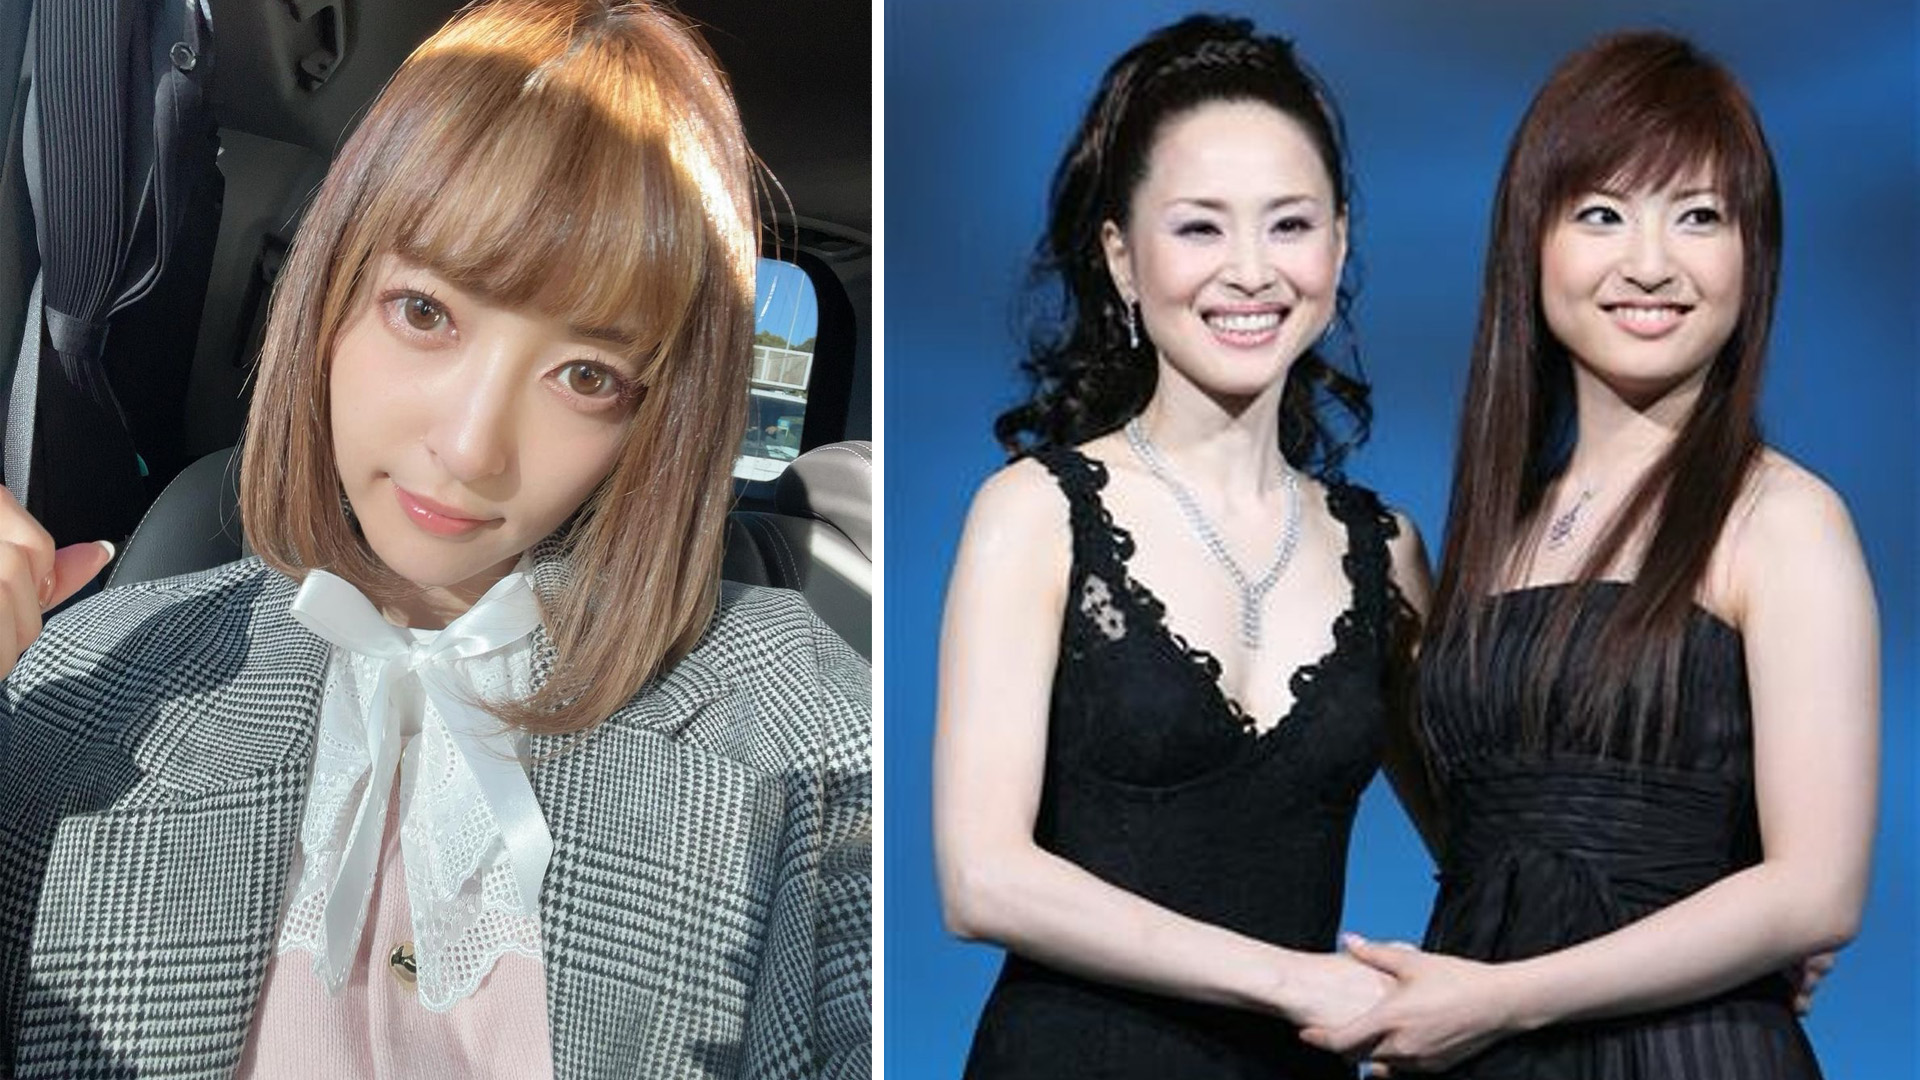 Japanese Actress Sayaka Kanda, Daughter Of '80s J-Pop Star Seiko Matsuda,  Dies From Apparent Fall From Hotel Room - 8days